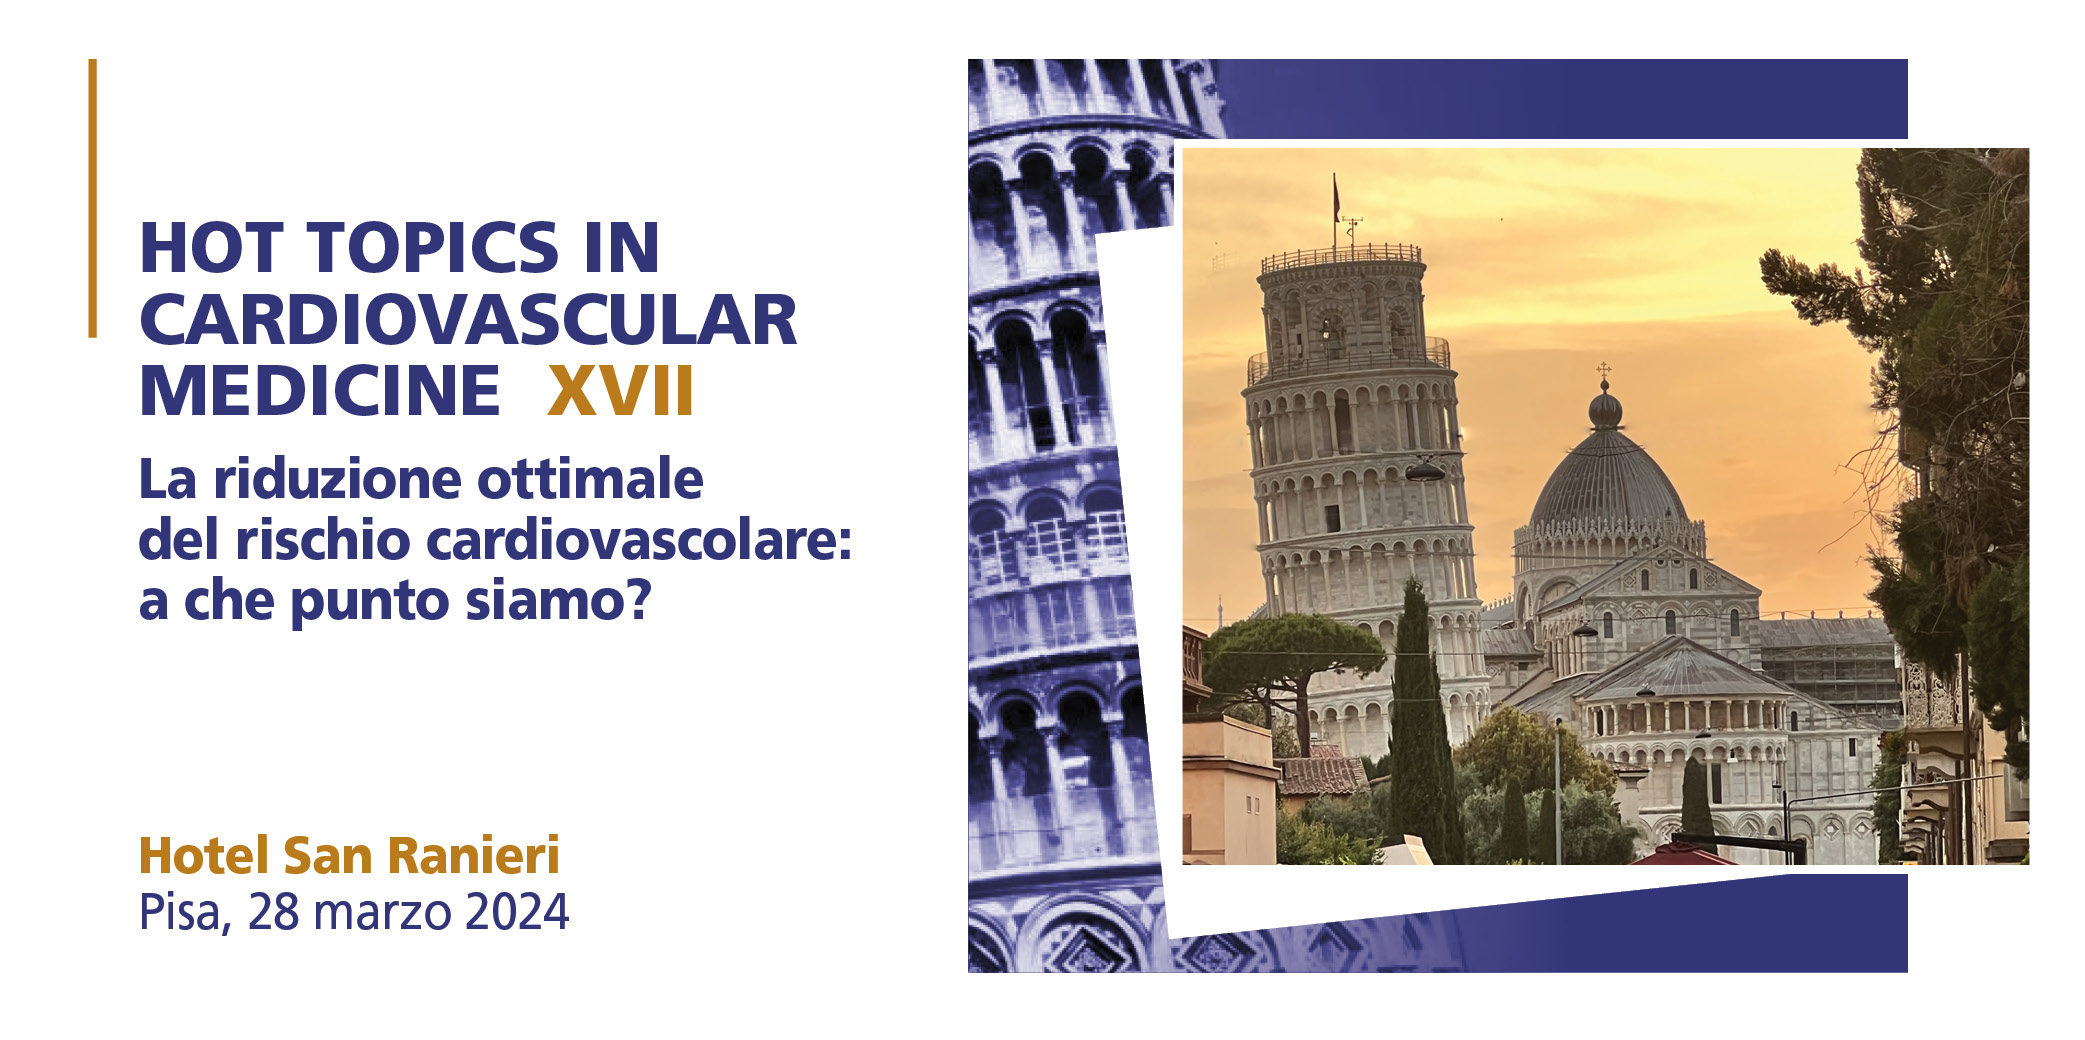 HOT TOPICS IN CARDIOVASCULAR MEDICINE XVII – Pisa, 28 Marzo 2024